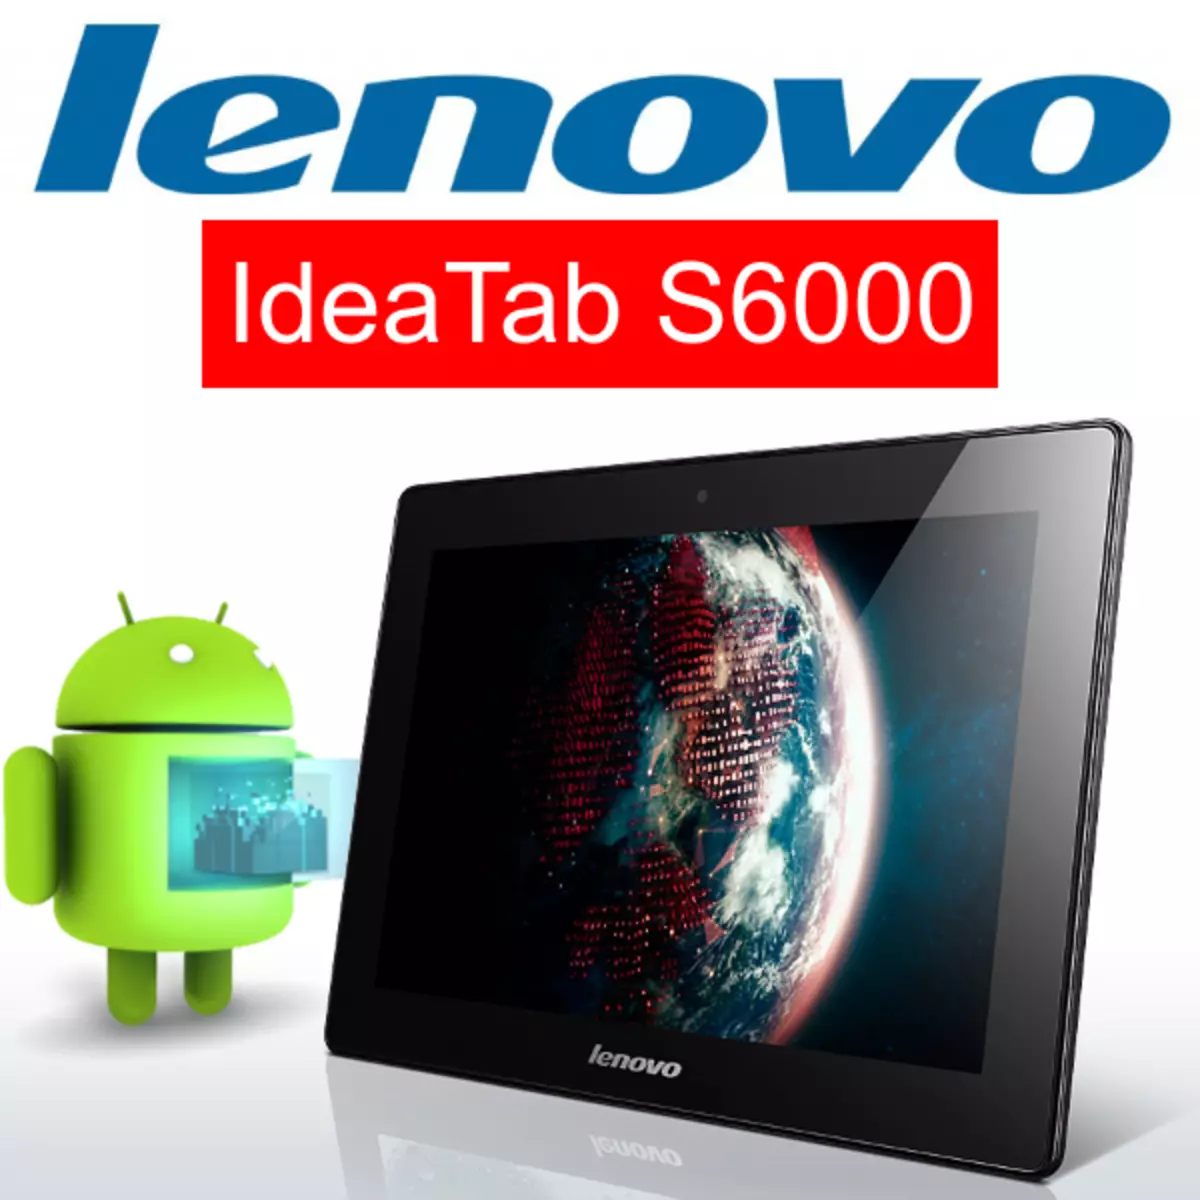 Firmware Lenovo Ideatab S6000.